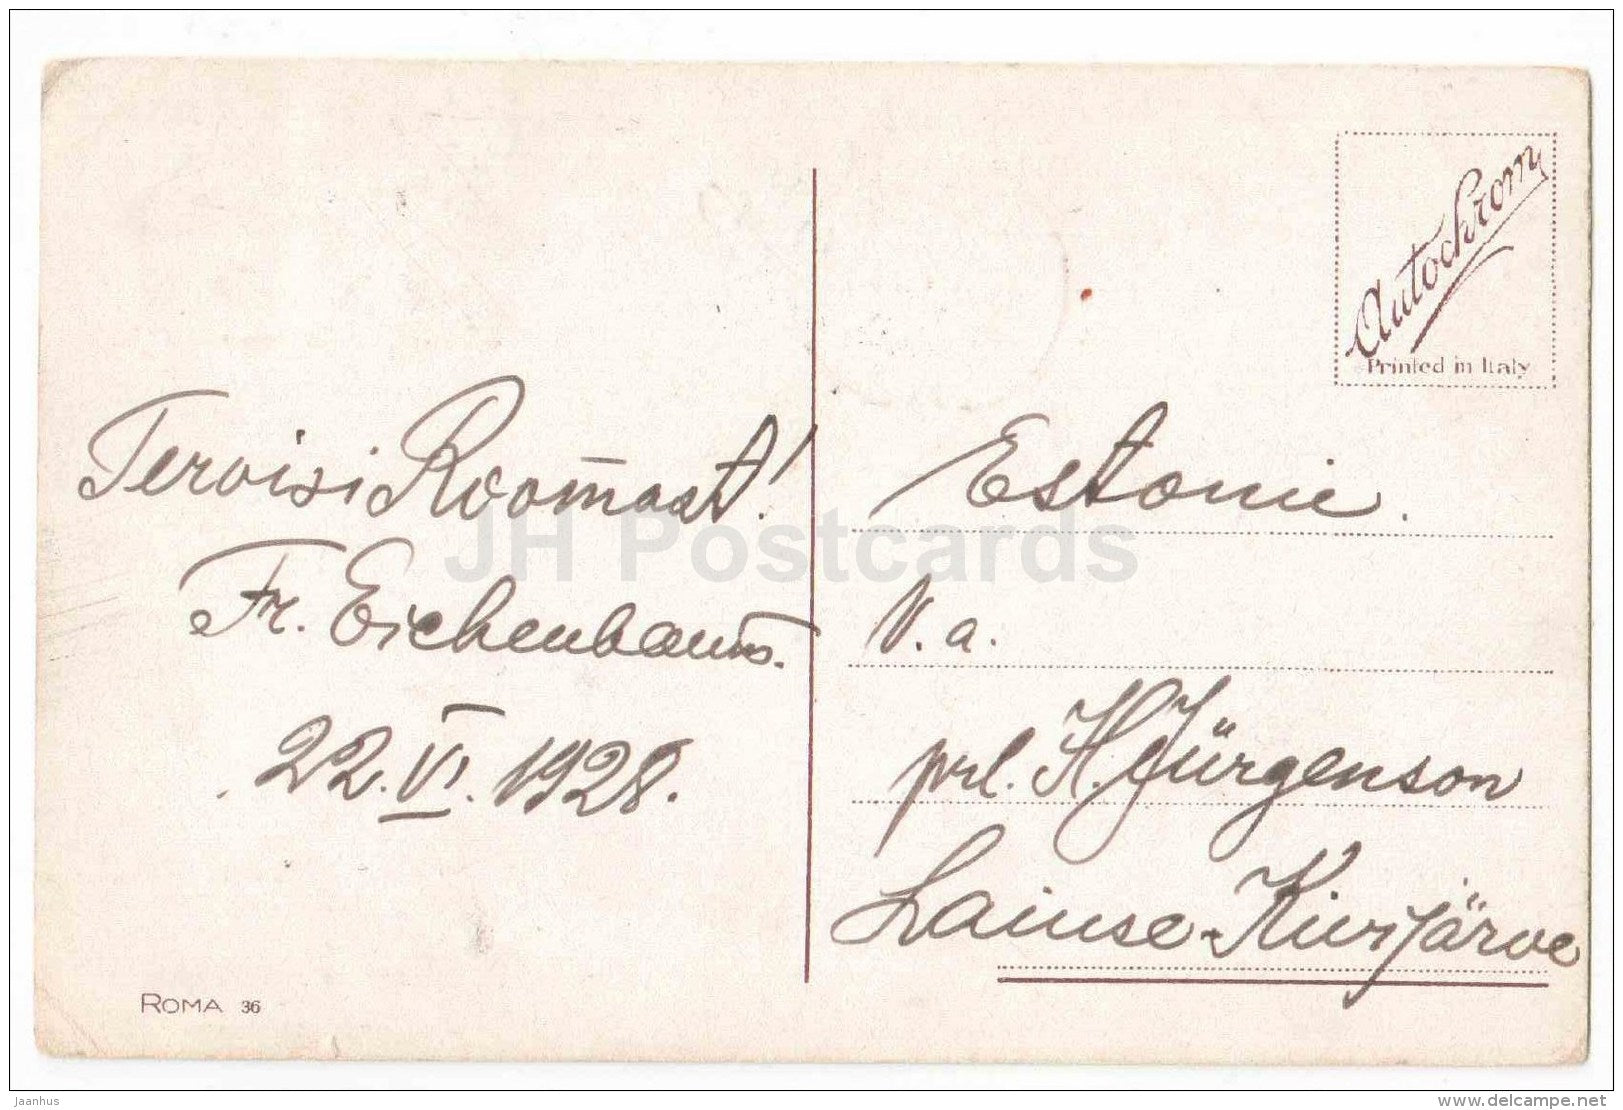 Il Panteon - Pantheon - Roma - Rome - 36 - Italia - Italy - sent from Italy Rome to Estonia 1928 - JH Postcards